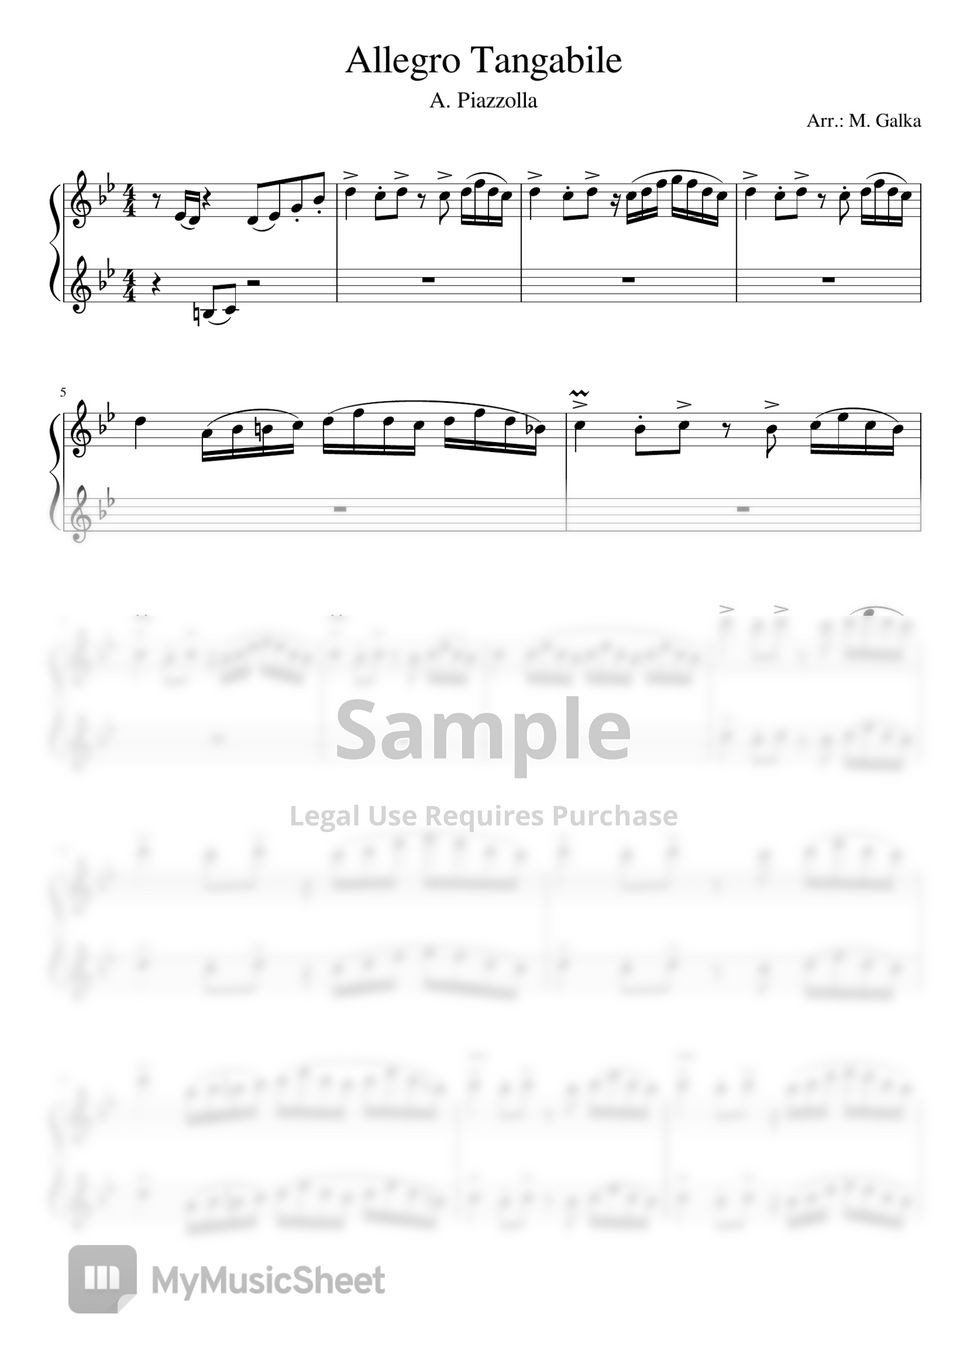 Astor Piazzolla - Allegro Tangabile Piano 4 hands by M. Galka